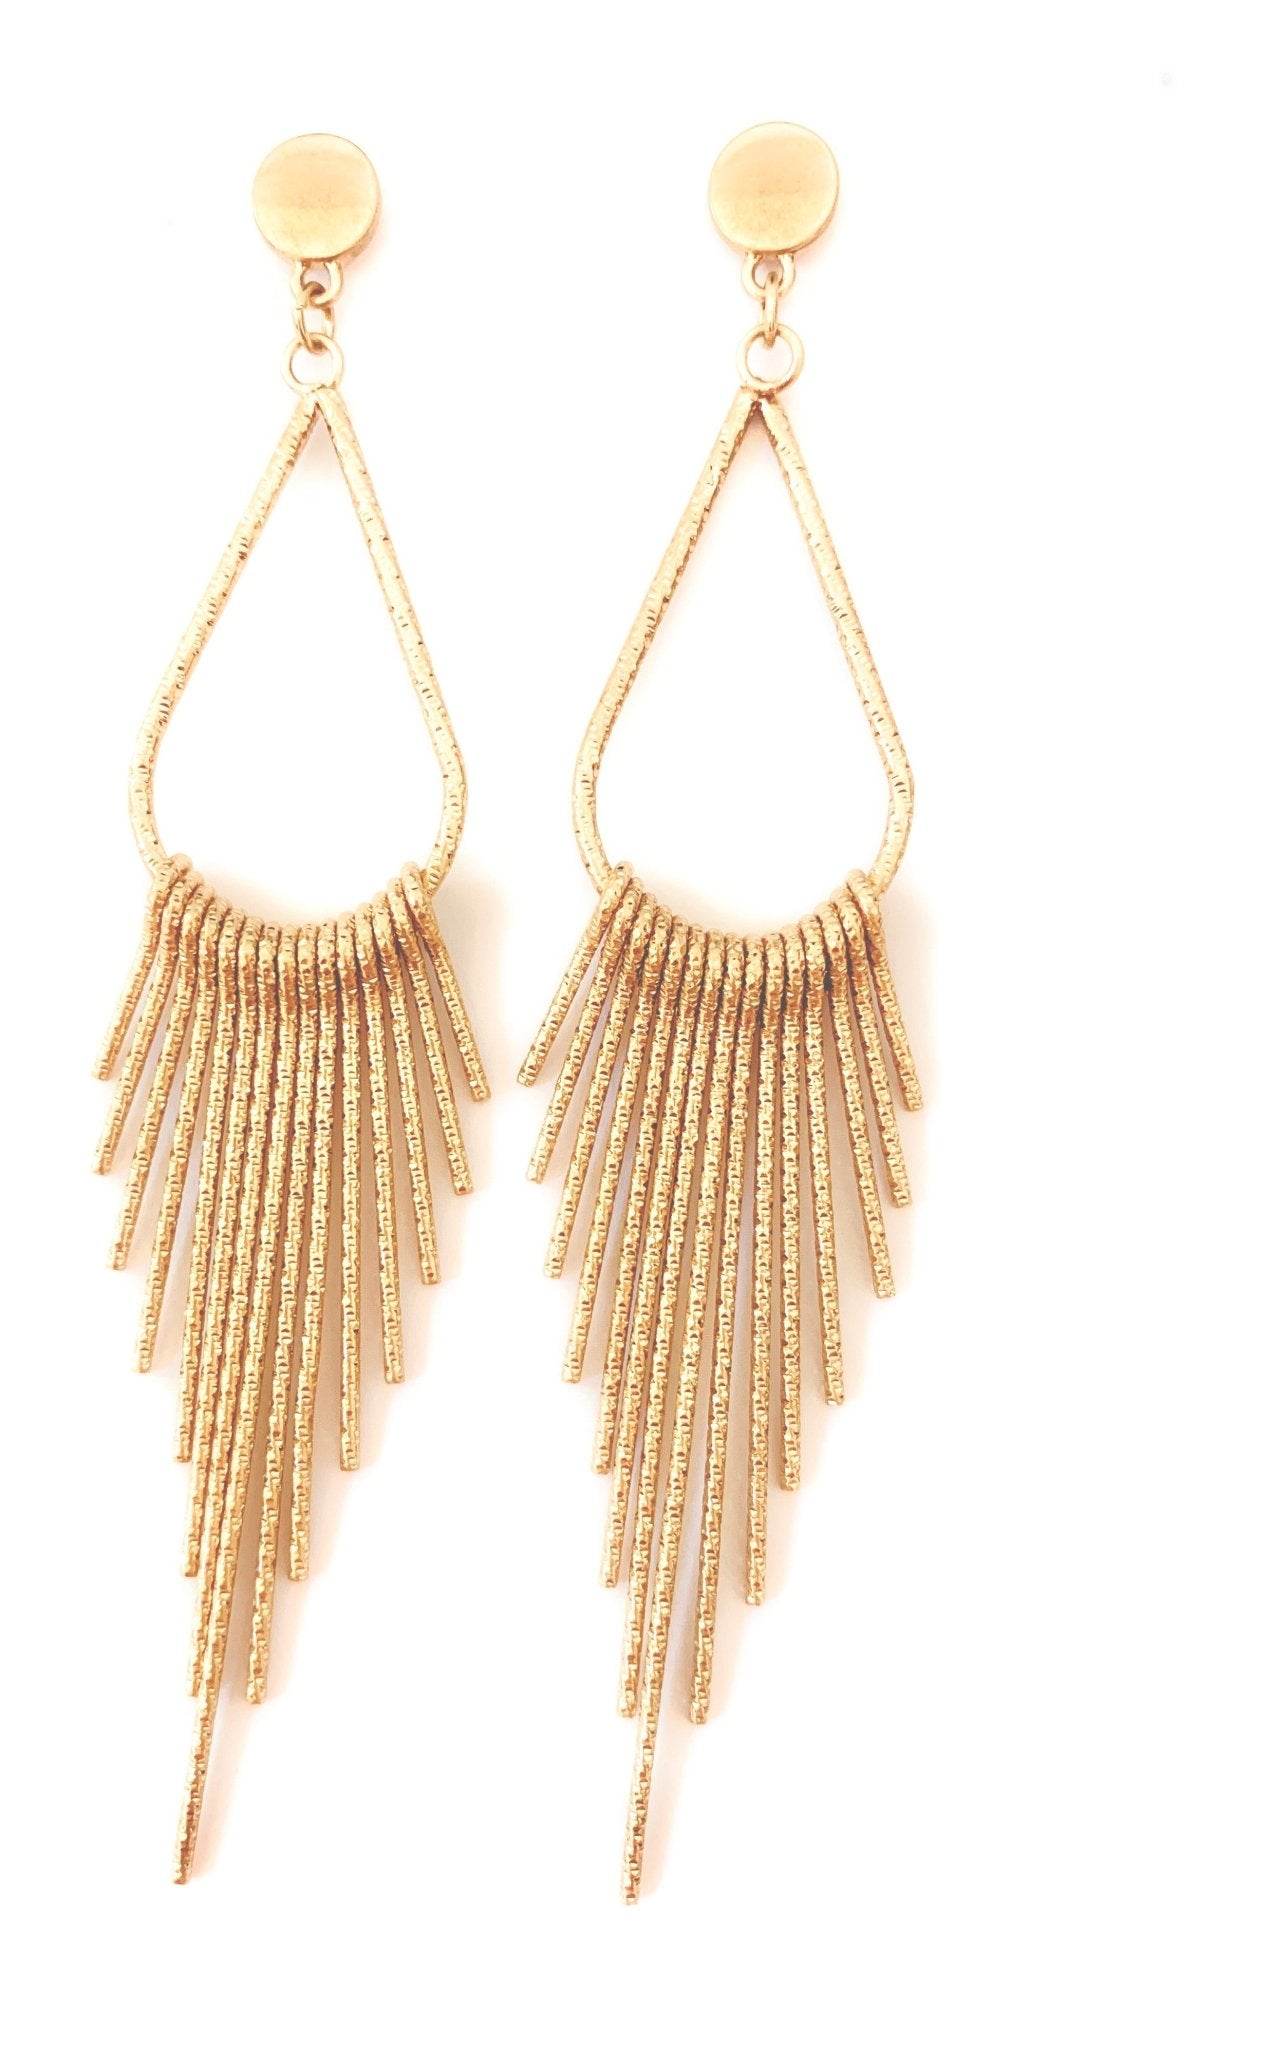 Long Tassel Earrings in Silver or Gold - Hollywood Sensation®